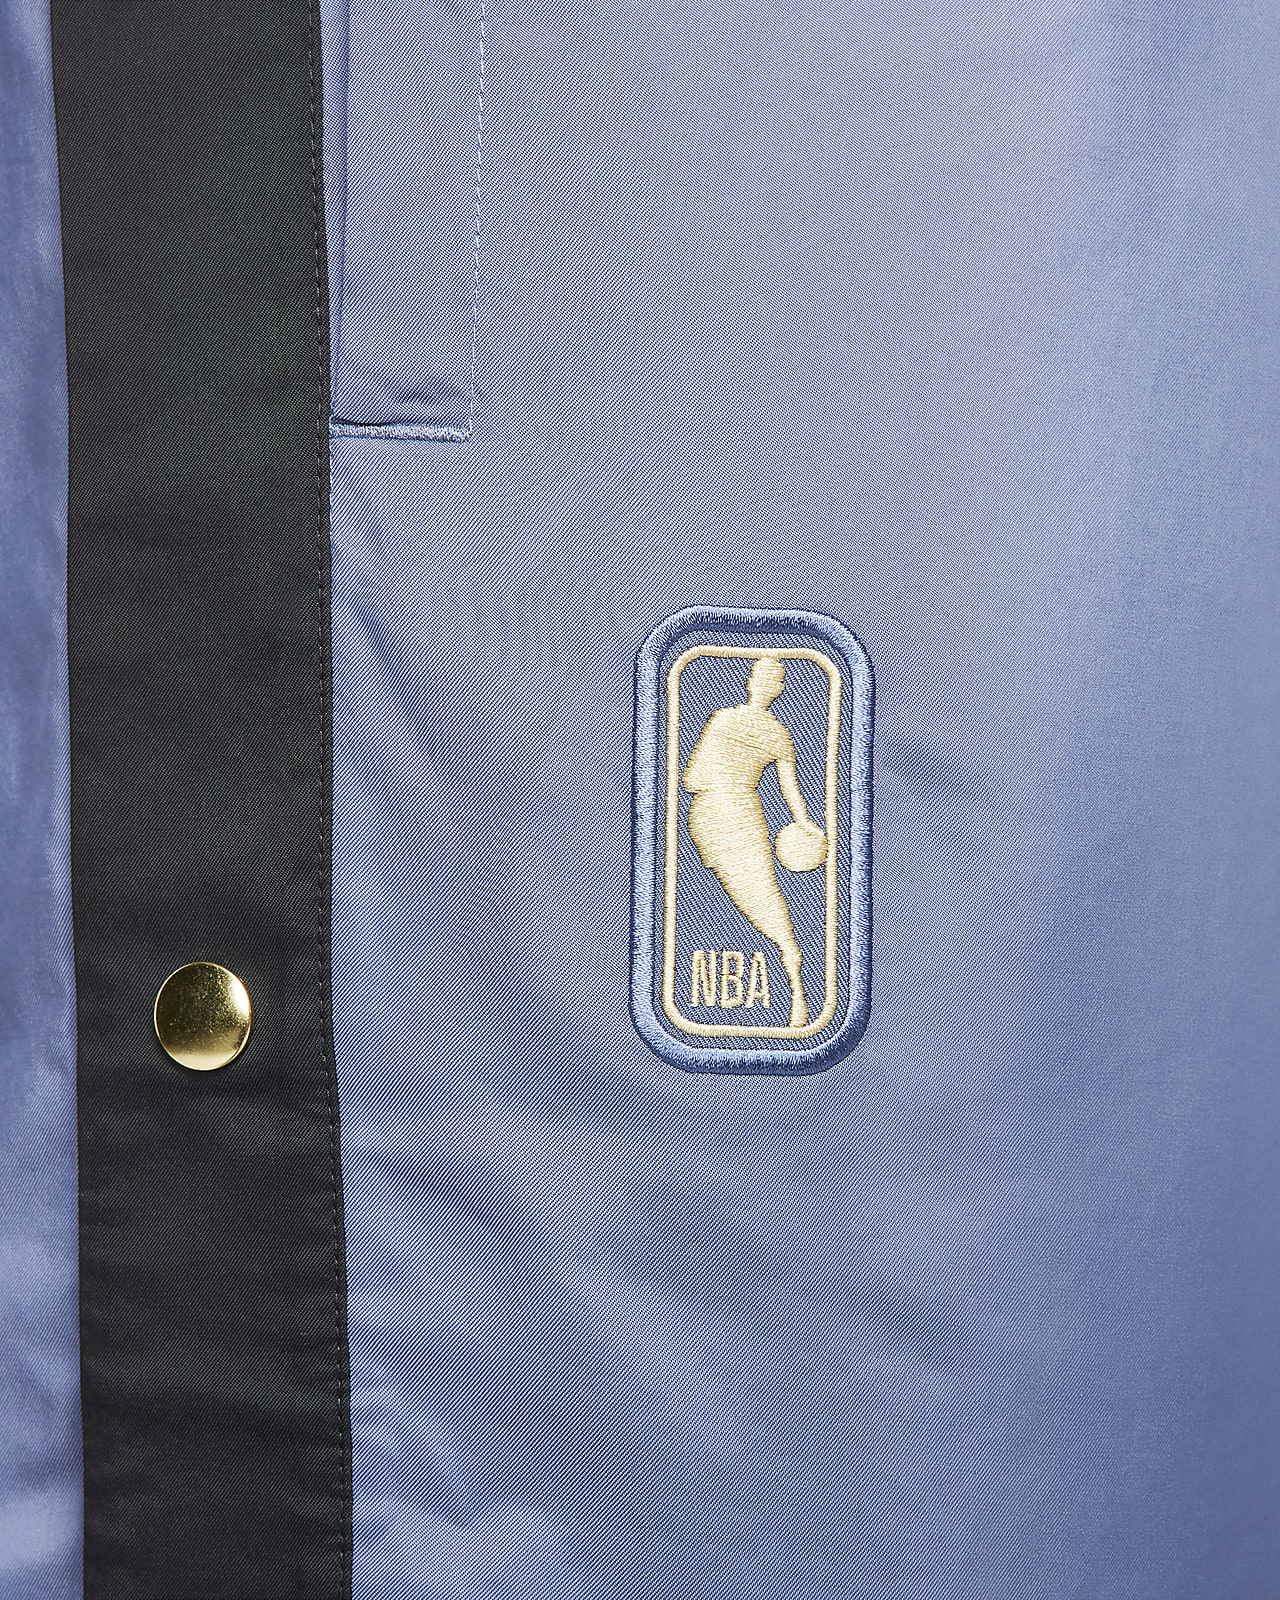 Vintage 90s Tear Away Pants Snap Side Basketball Warm Up Blue Men's Size M  G3